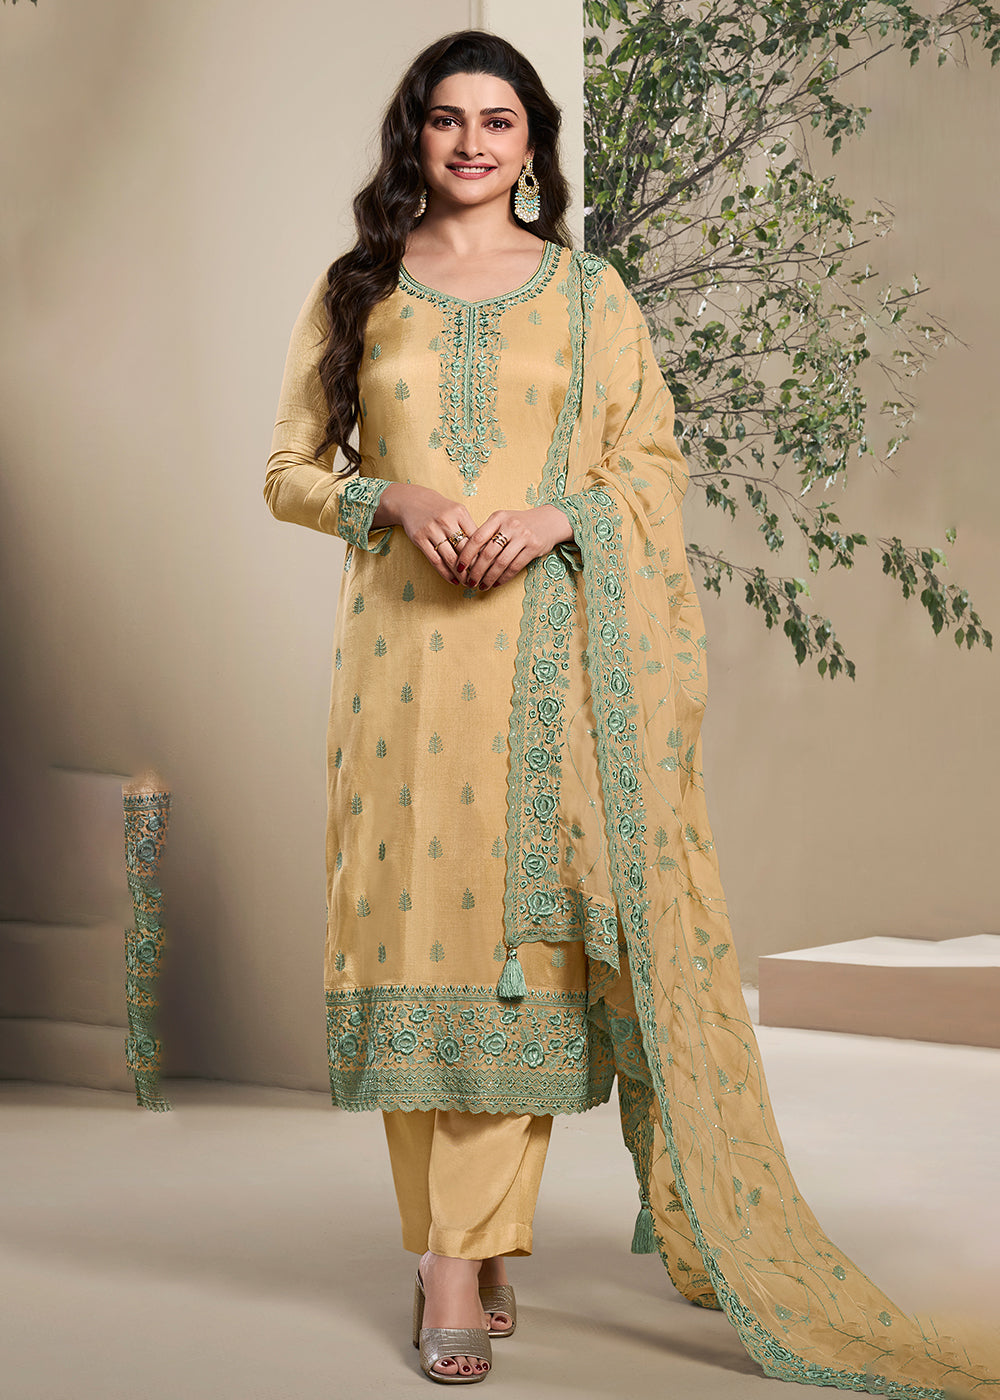 Buy Now Dola Silk Mustard Thread Embroidered Wedding Salwar Suit Online in USA, UK, Canada, Germany, Australia & Worldwide at Empress Clothing. 